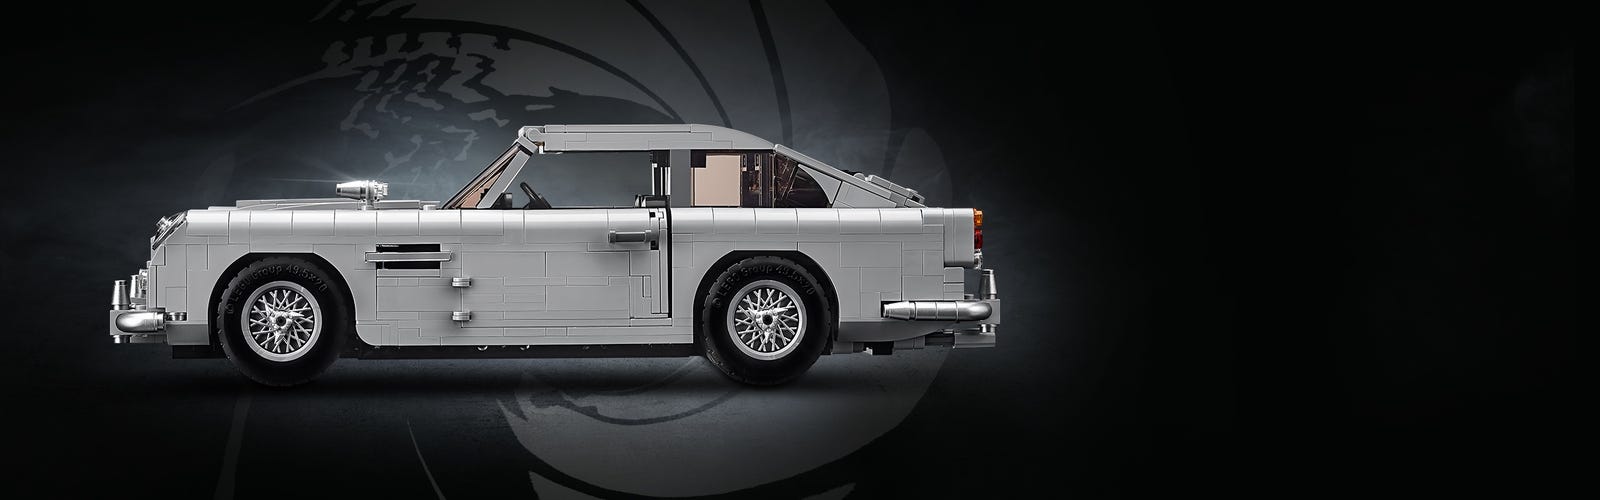 LEGO Creator Expert James Bond Aston Martin DB5 10262 Building Kit (1295  Pieces)